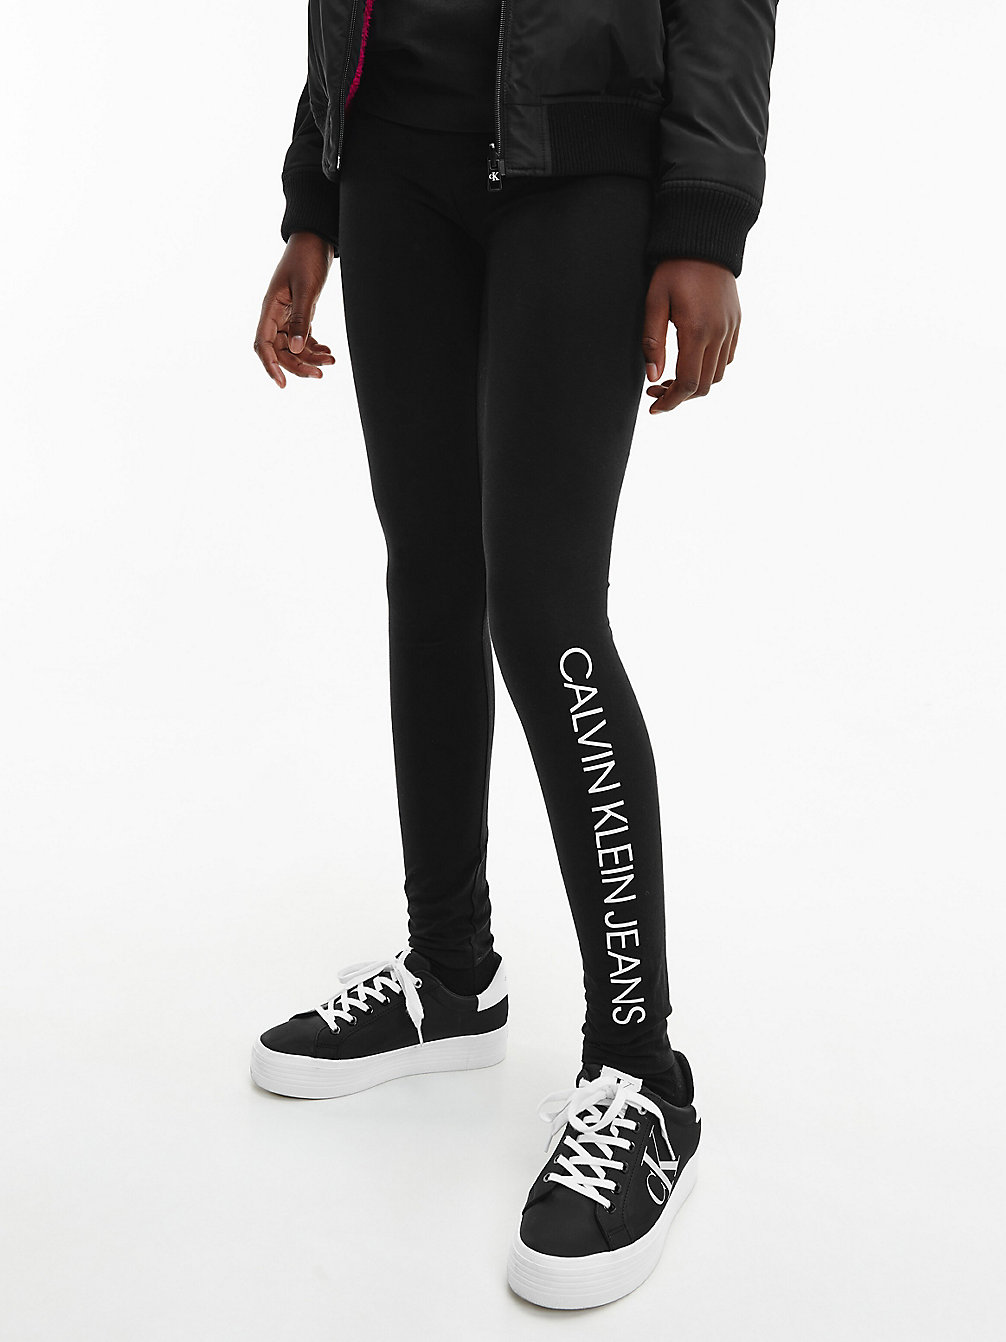 CK BLACK > Legging Met Logo > undefined girls - Calvin Klein